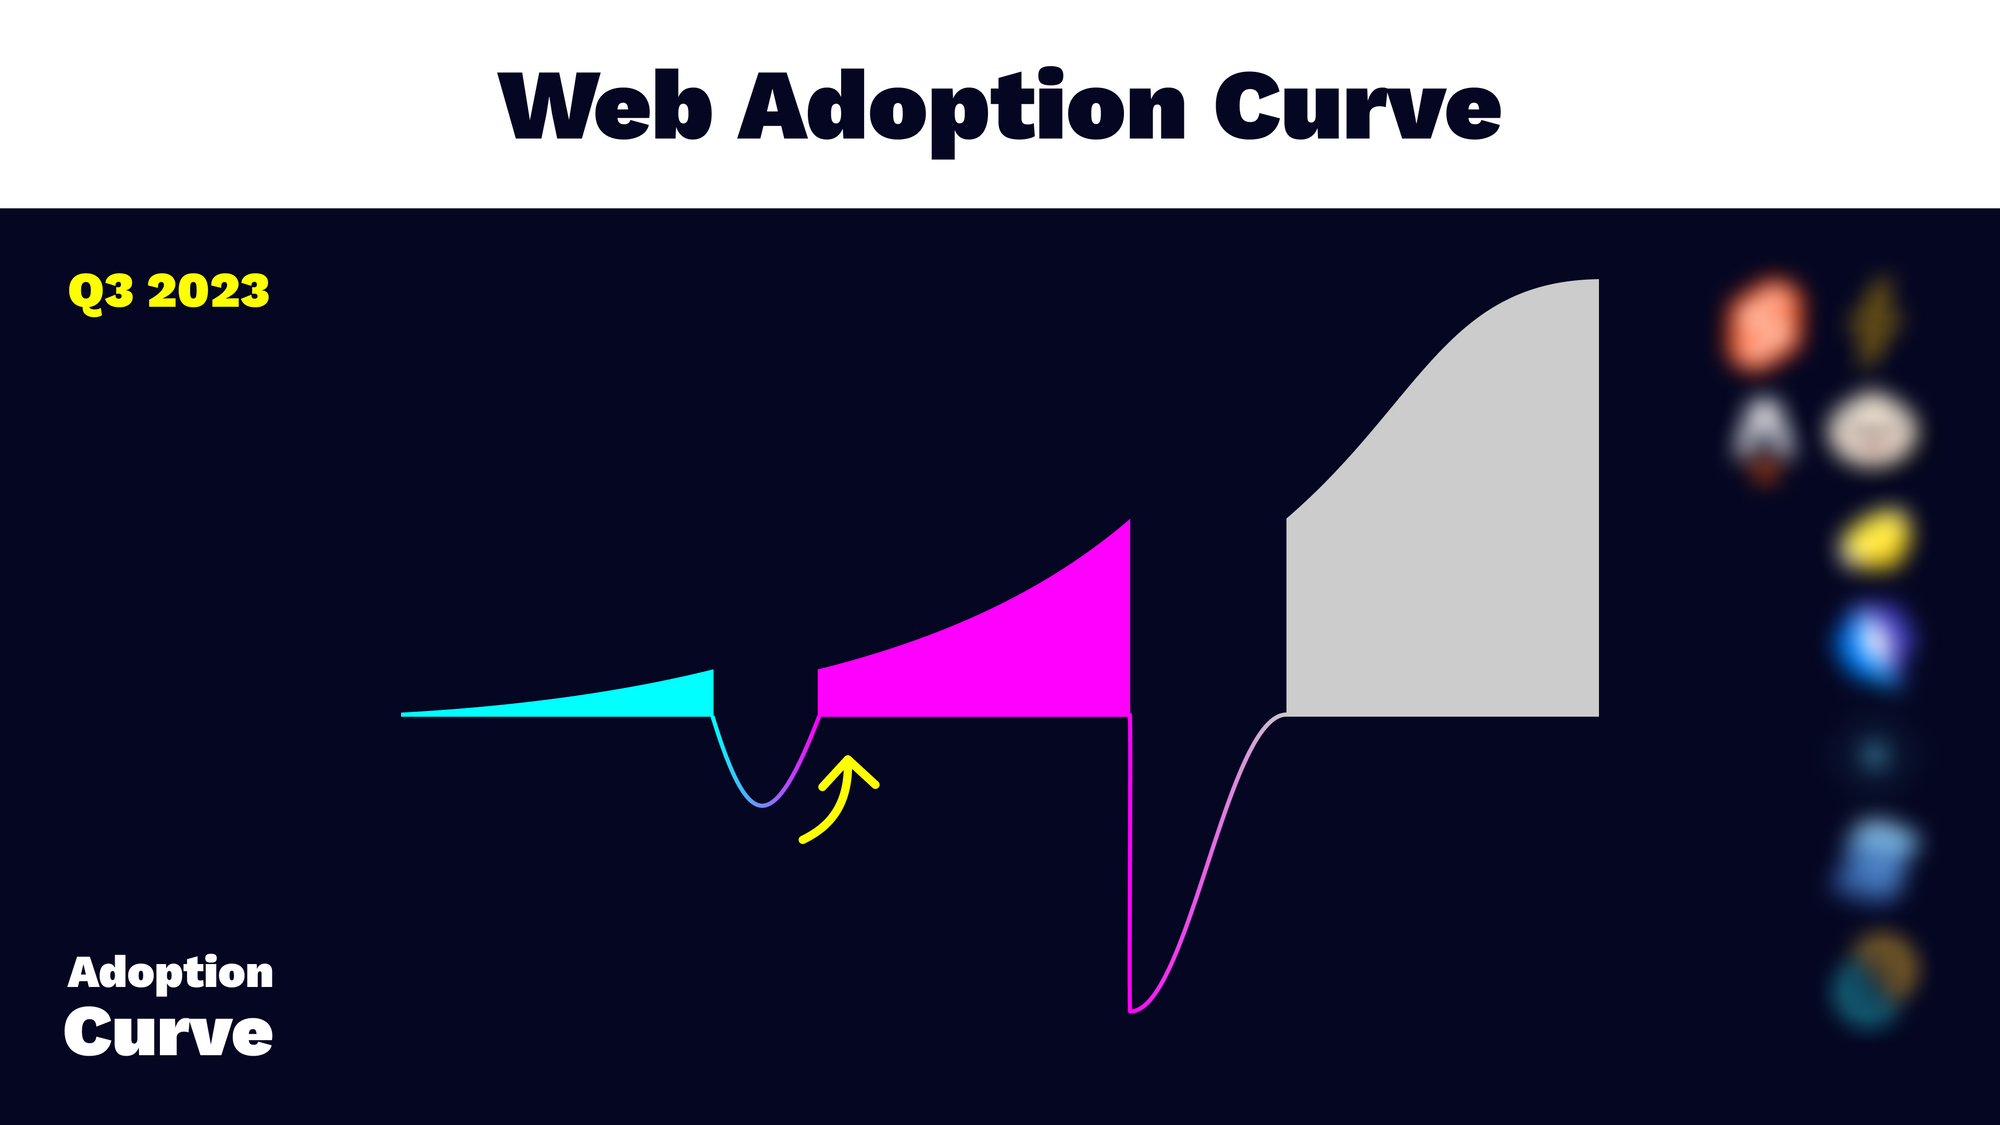 Web Adoption Curve - Q3 2023